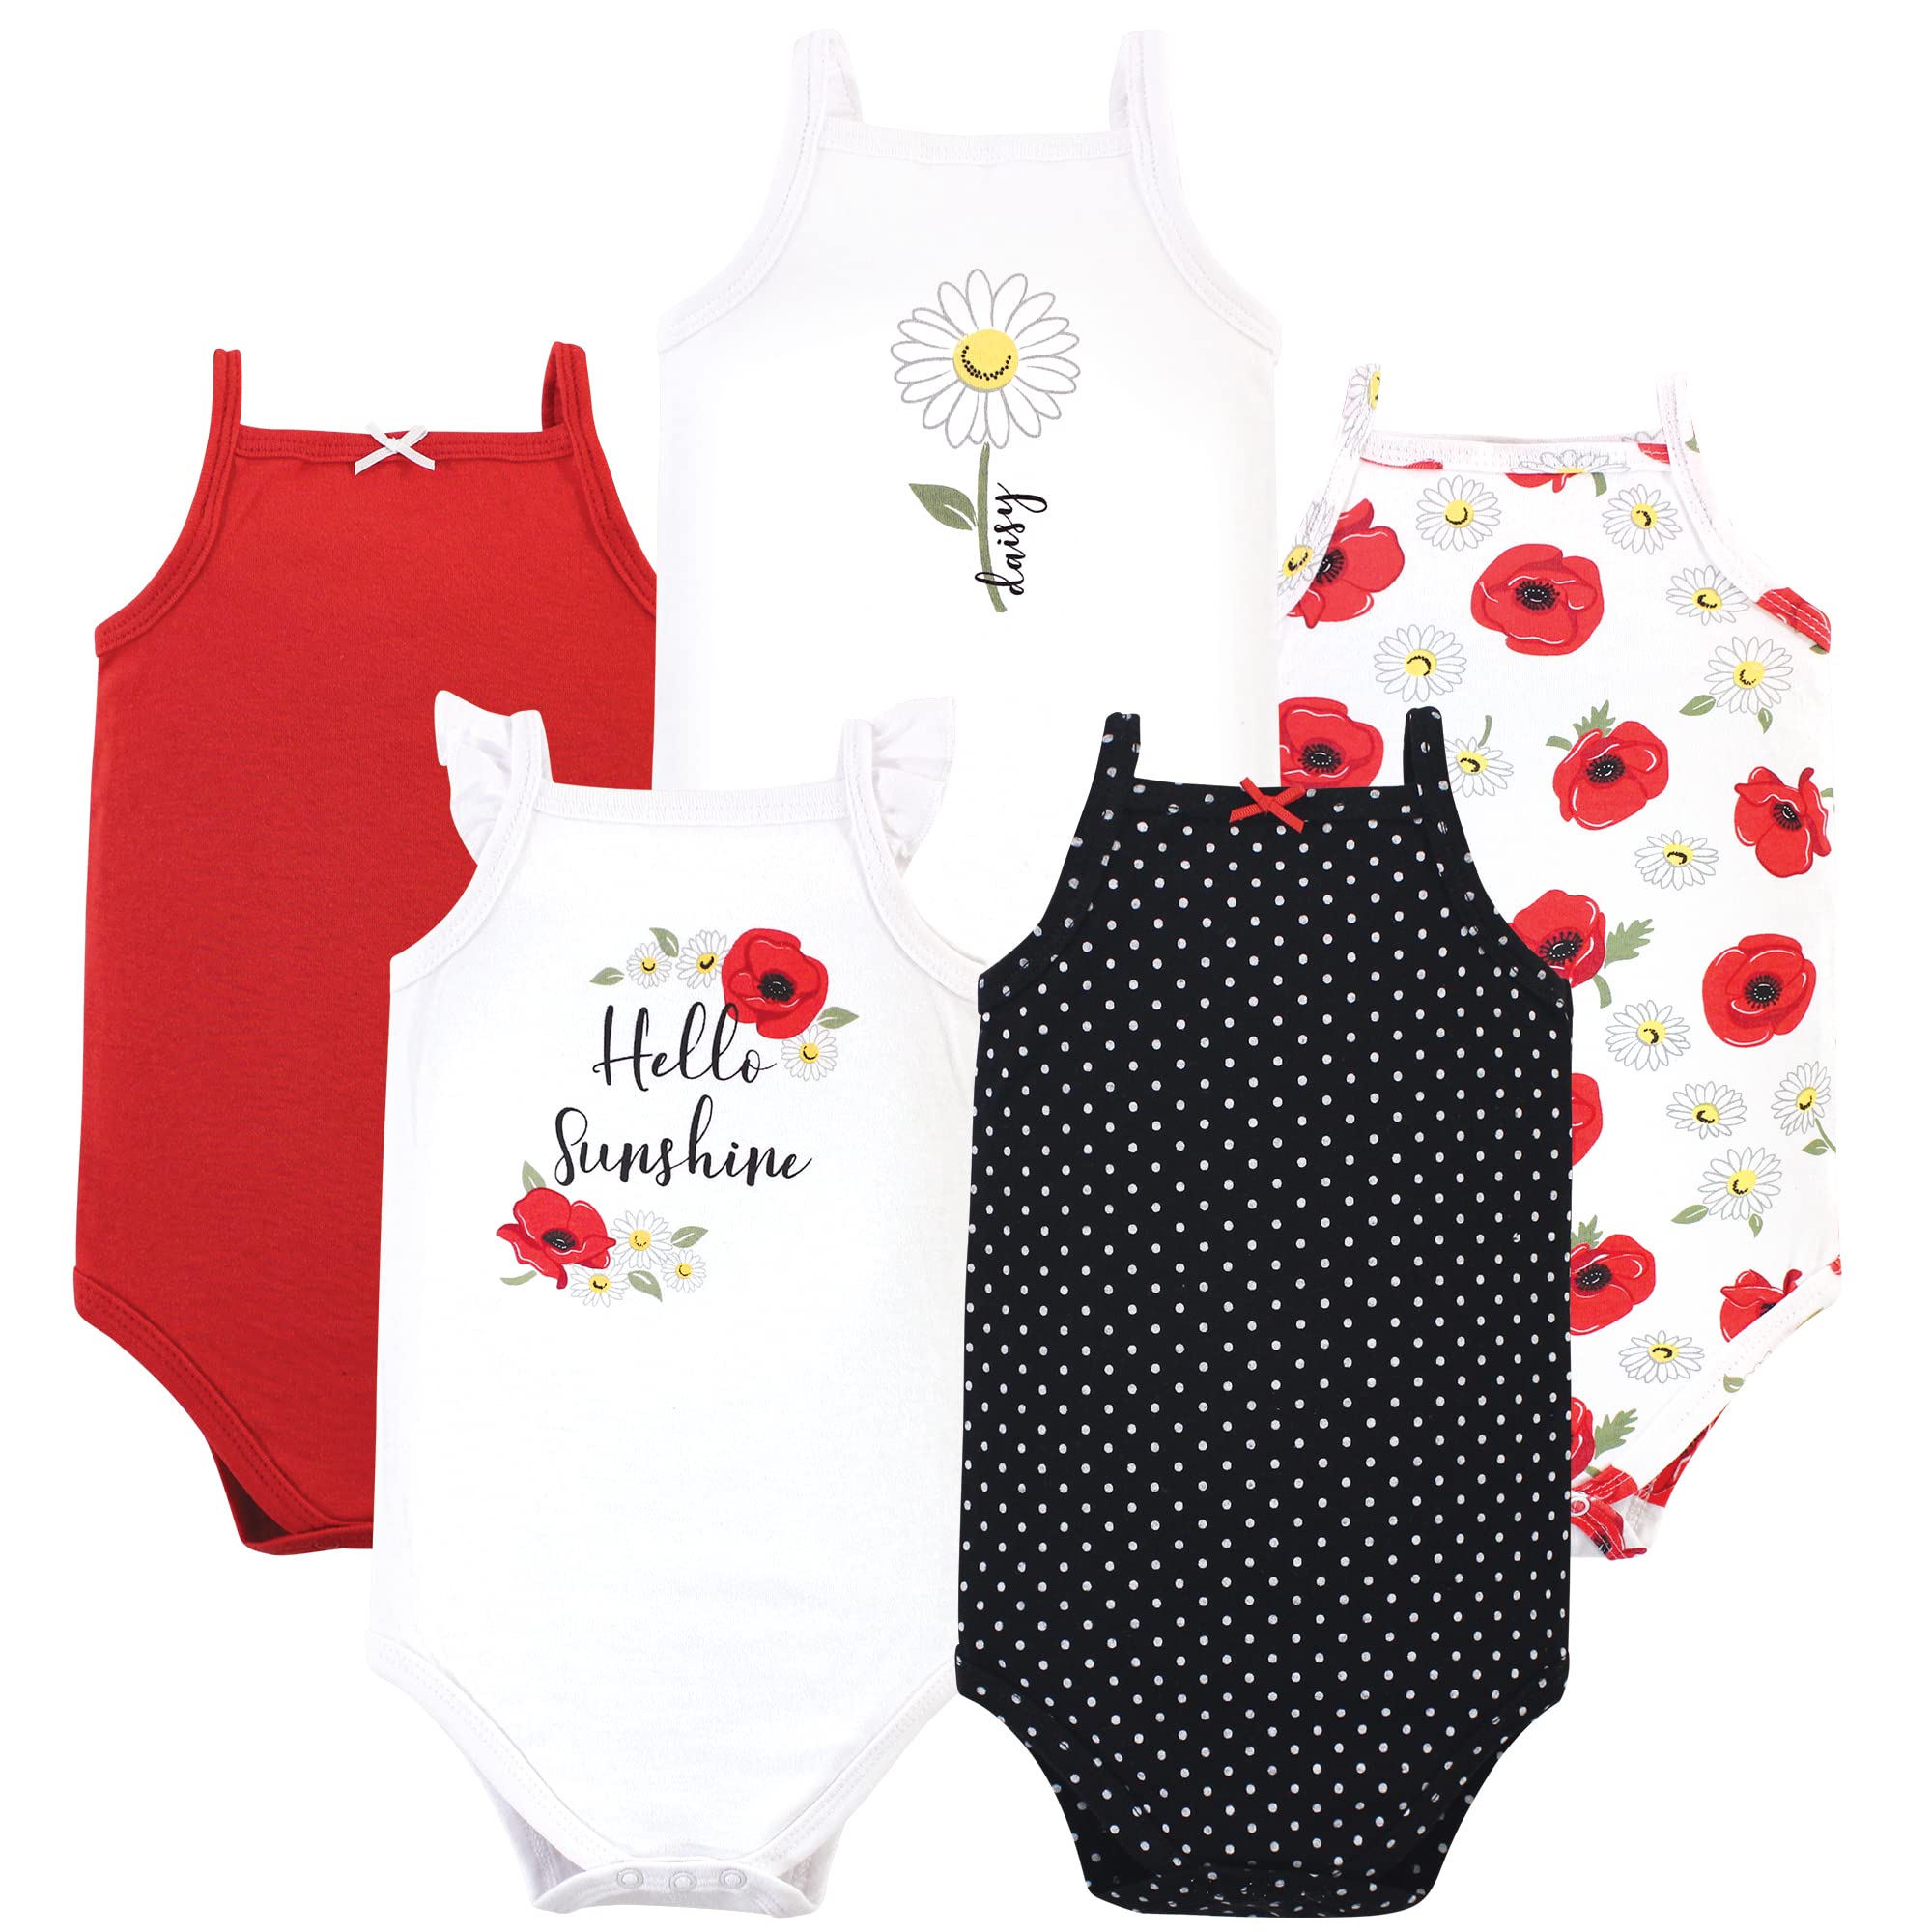 Hudson Baby Unisex Baby Cotton Sleeveless Bodysuits